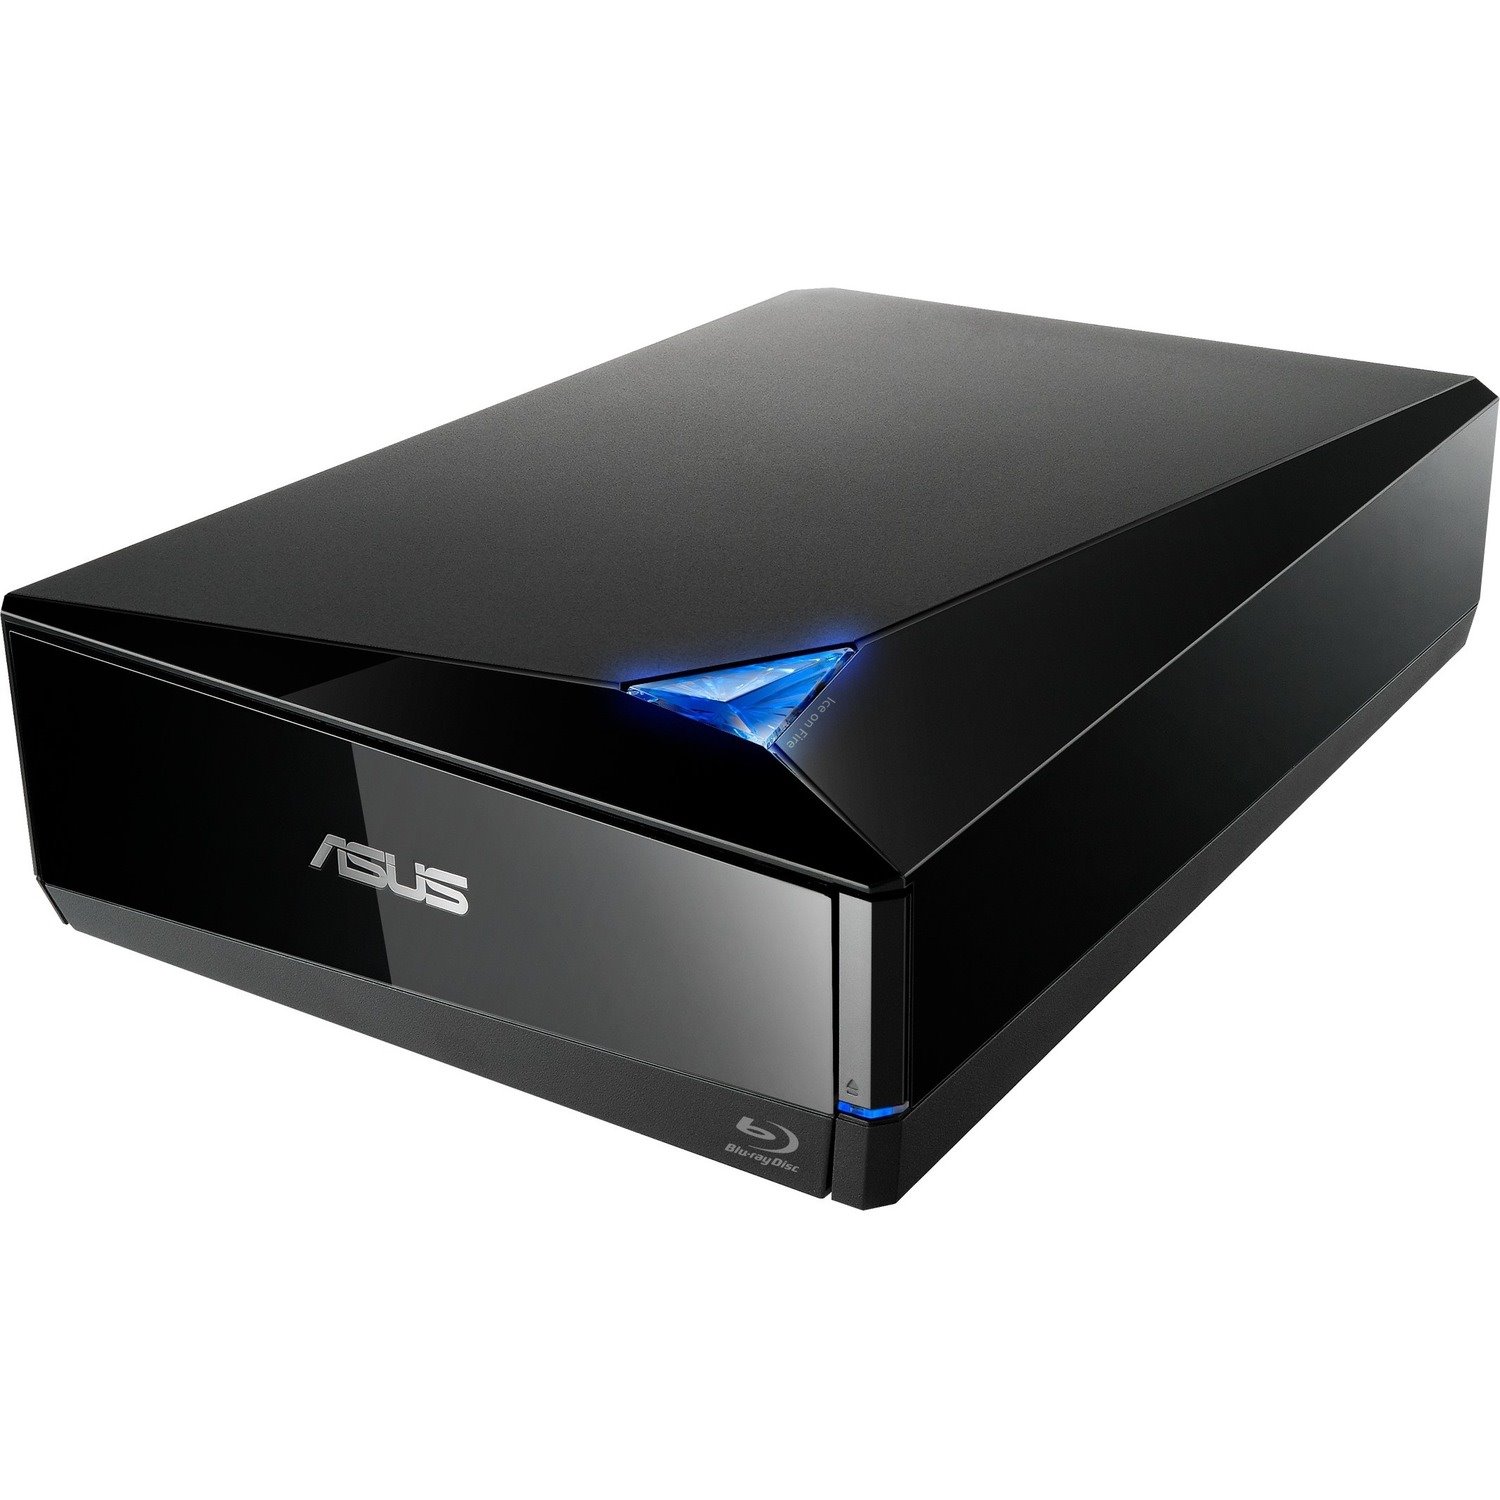 Asus TurboDrive BW-16D1H-U PRO Blu-ray Writer - External - Retail Pack - Black